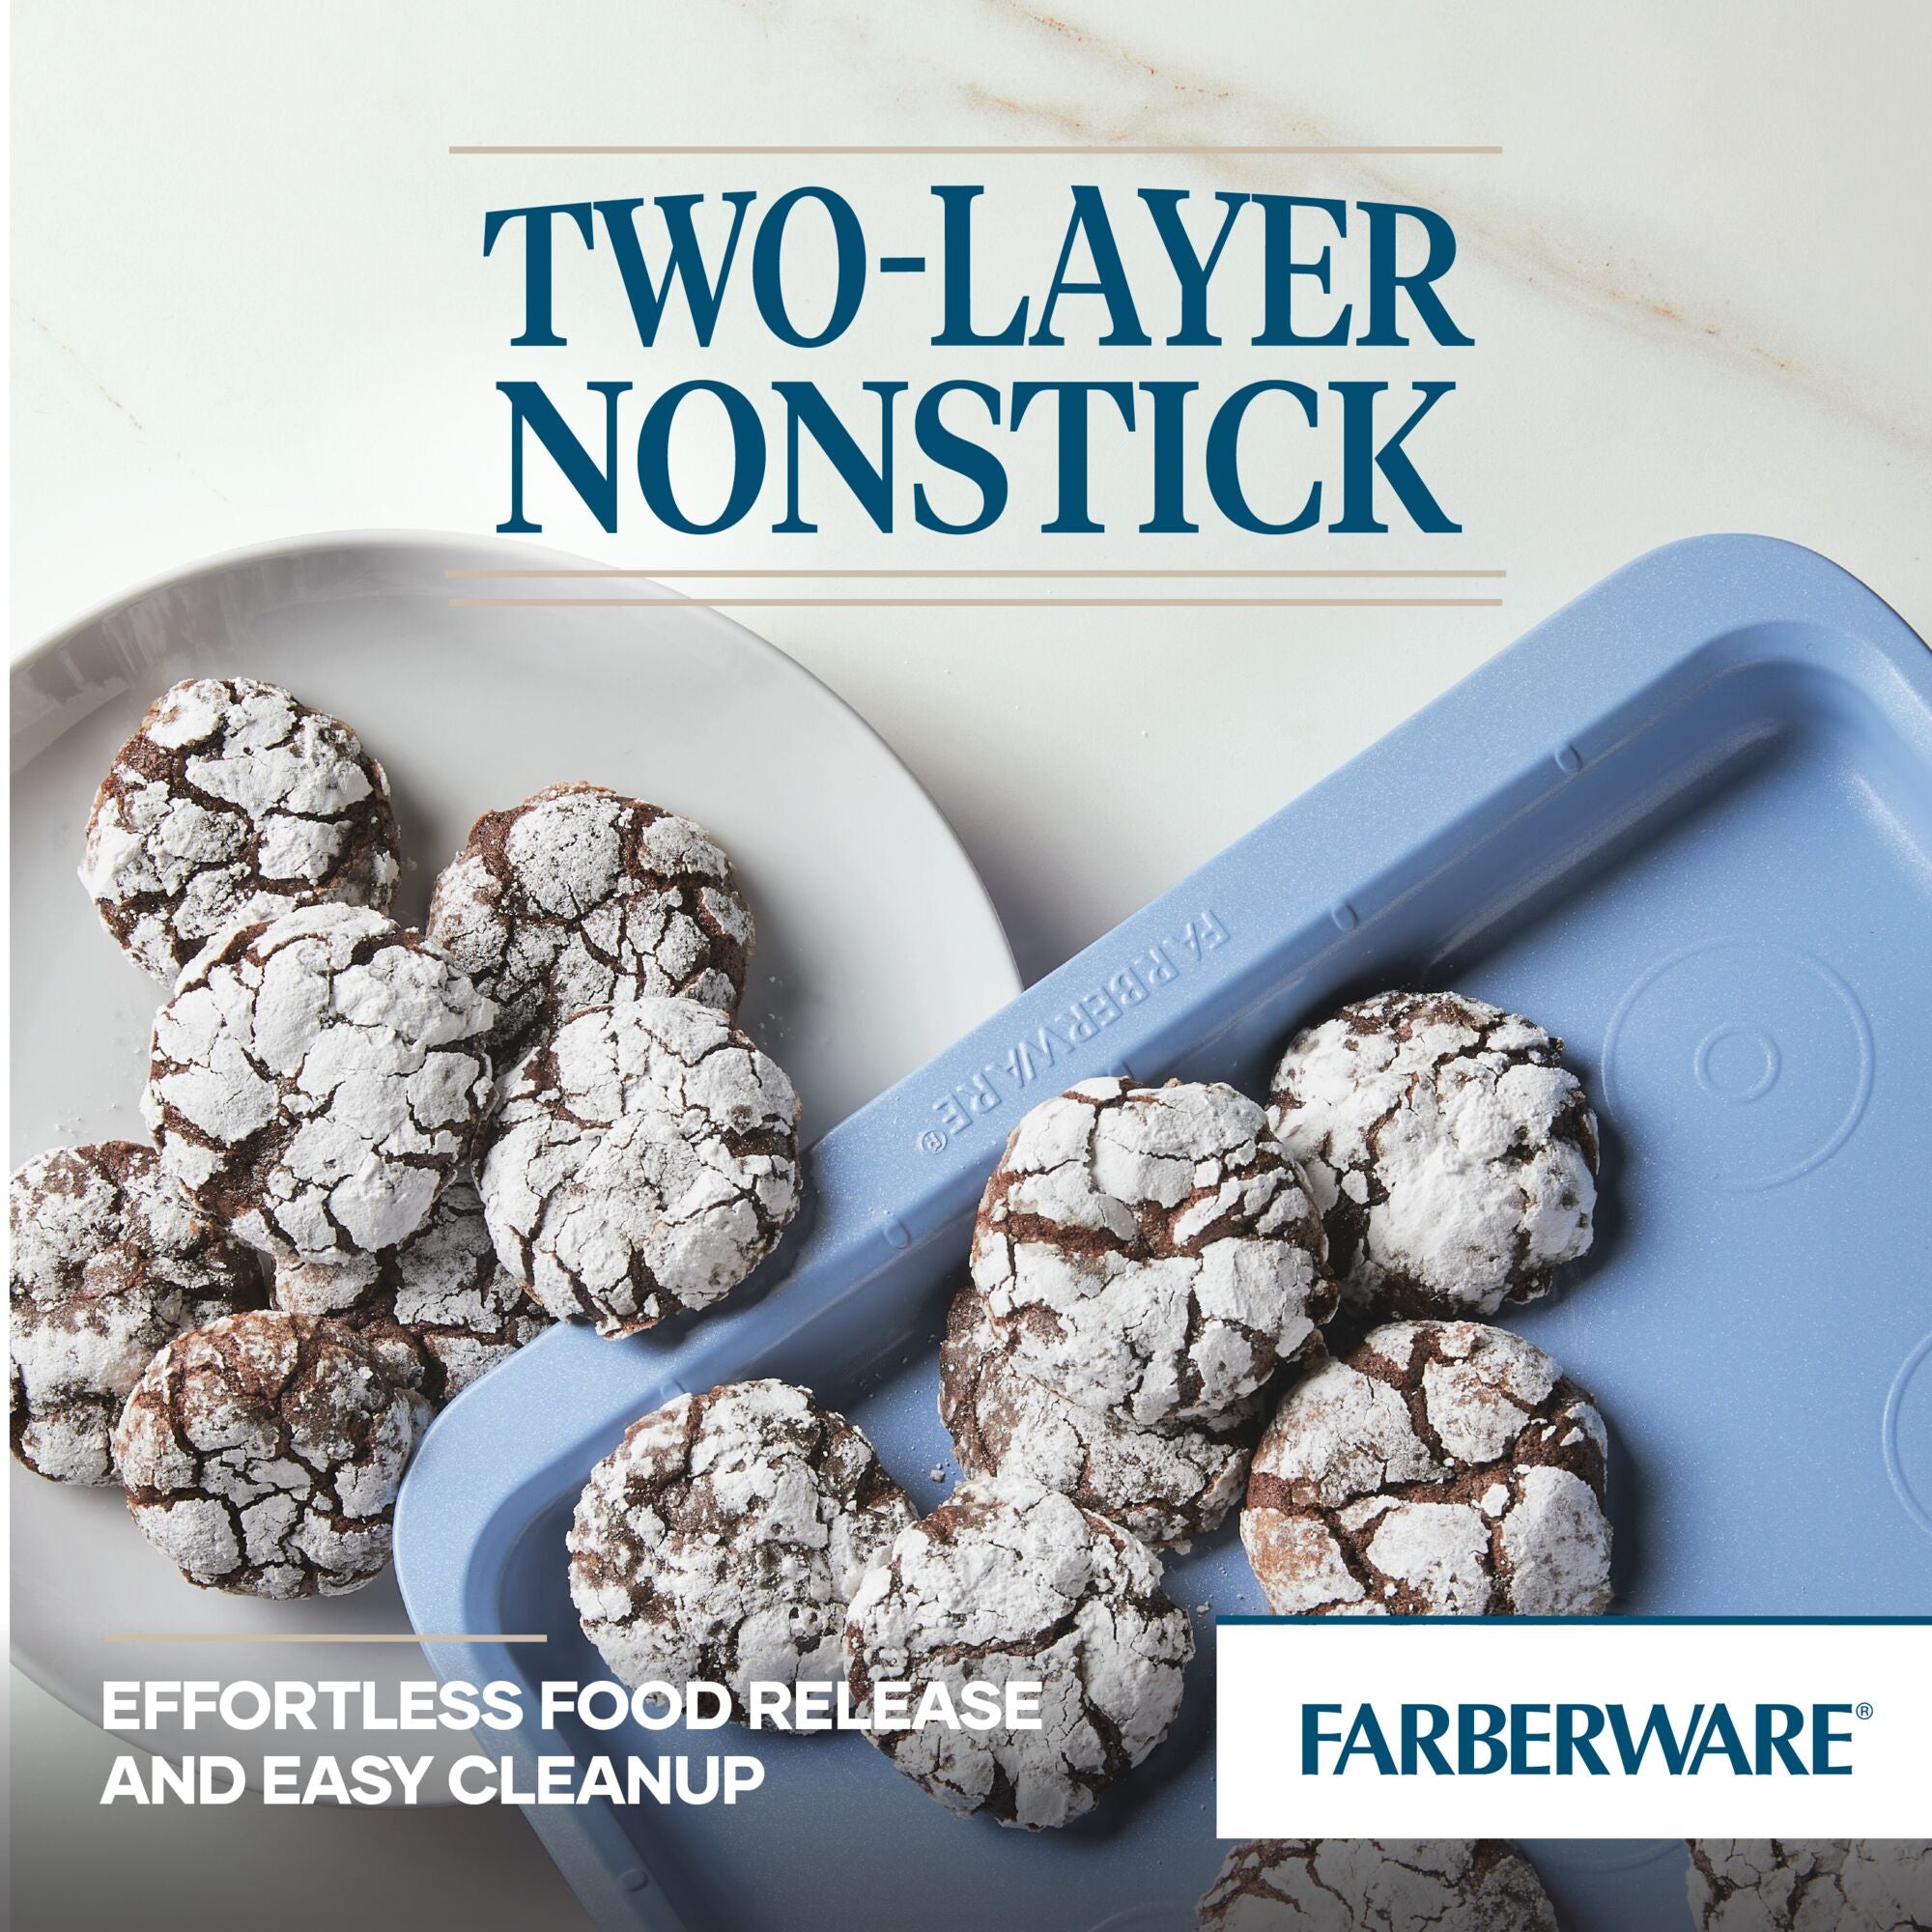 Farberware Insulated Bakeware Nonstick Cookie Baking Sheet: The